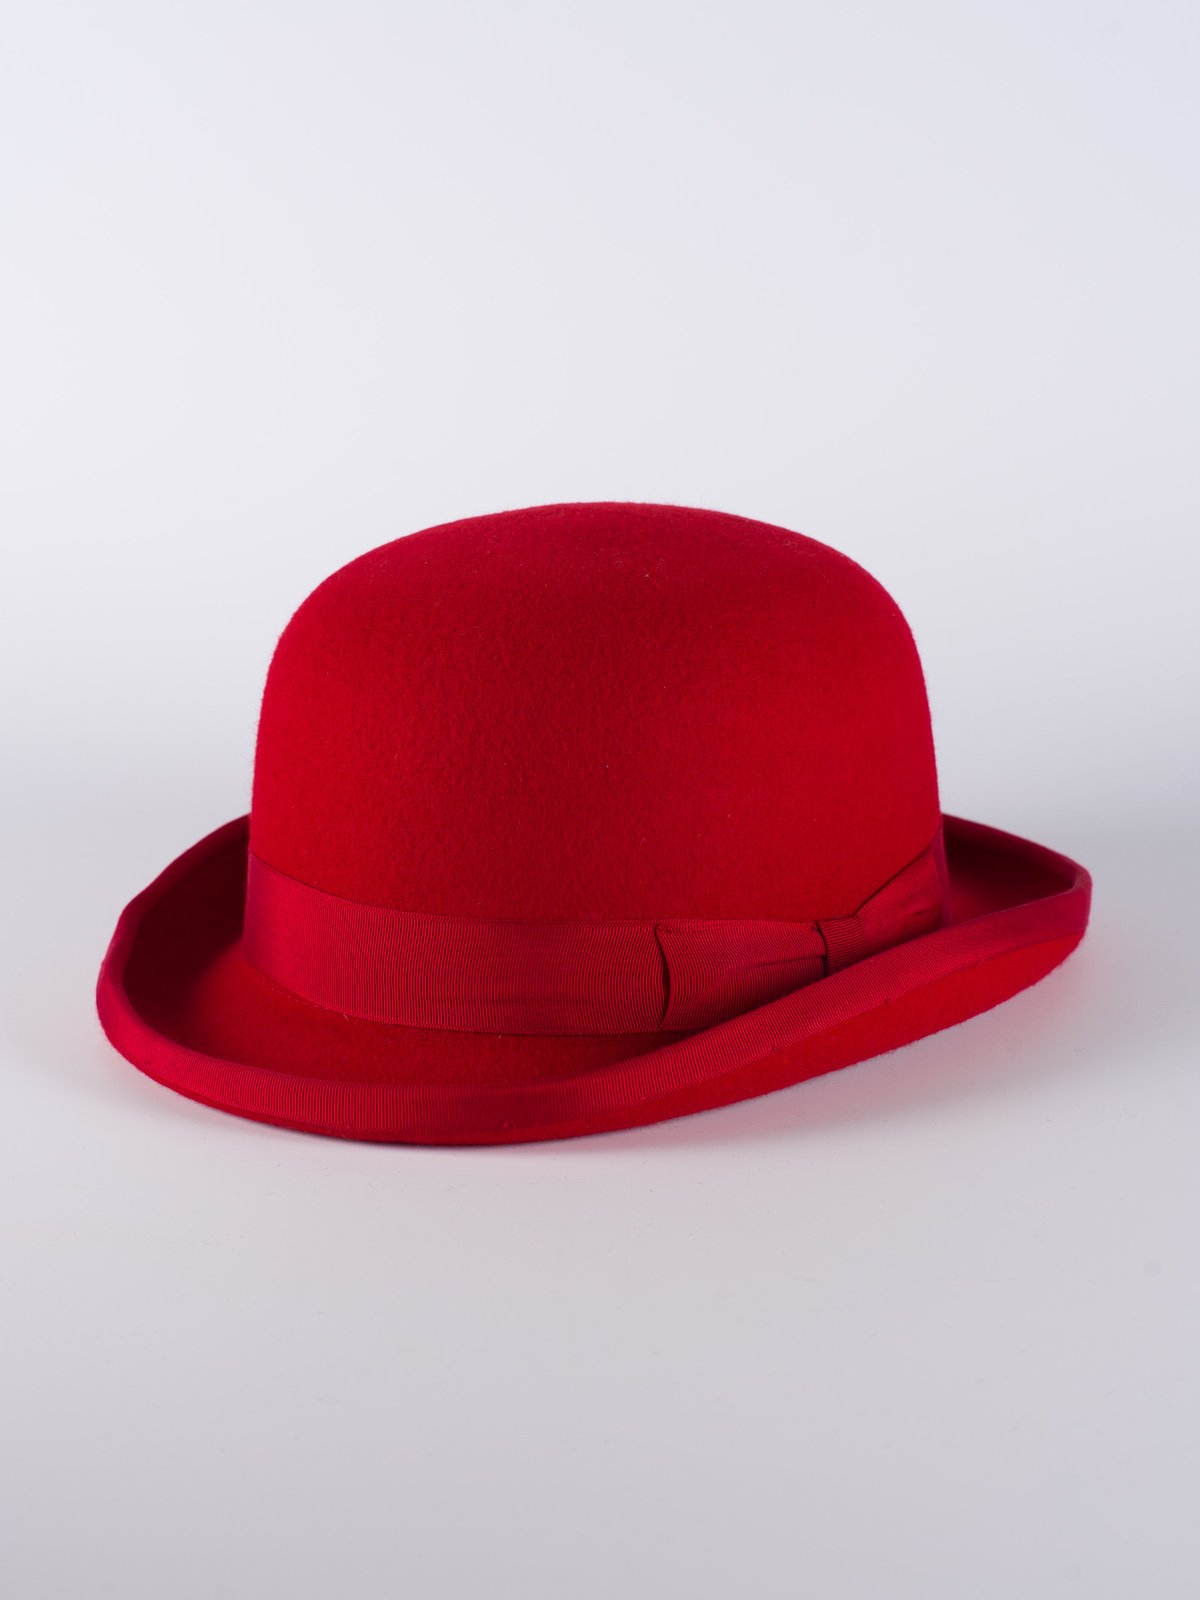 Red Bowler Hat Bespoke Designer Headwear Feathered Fantasy